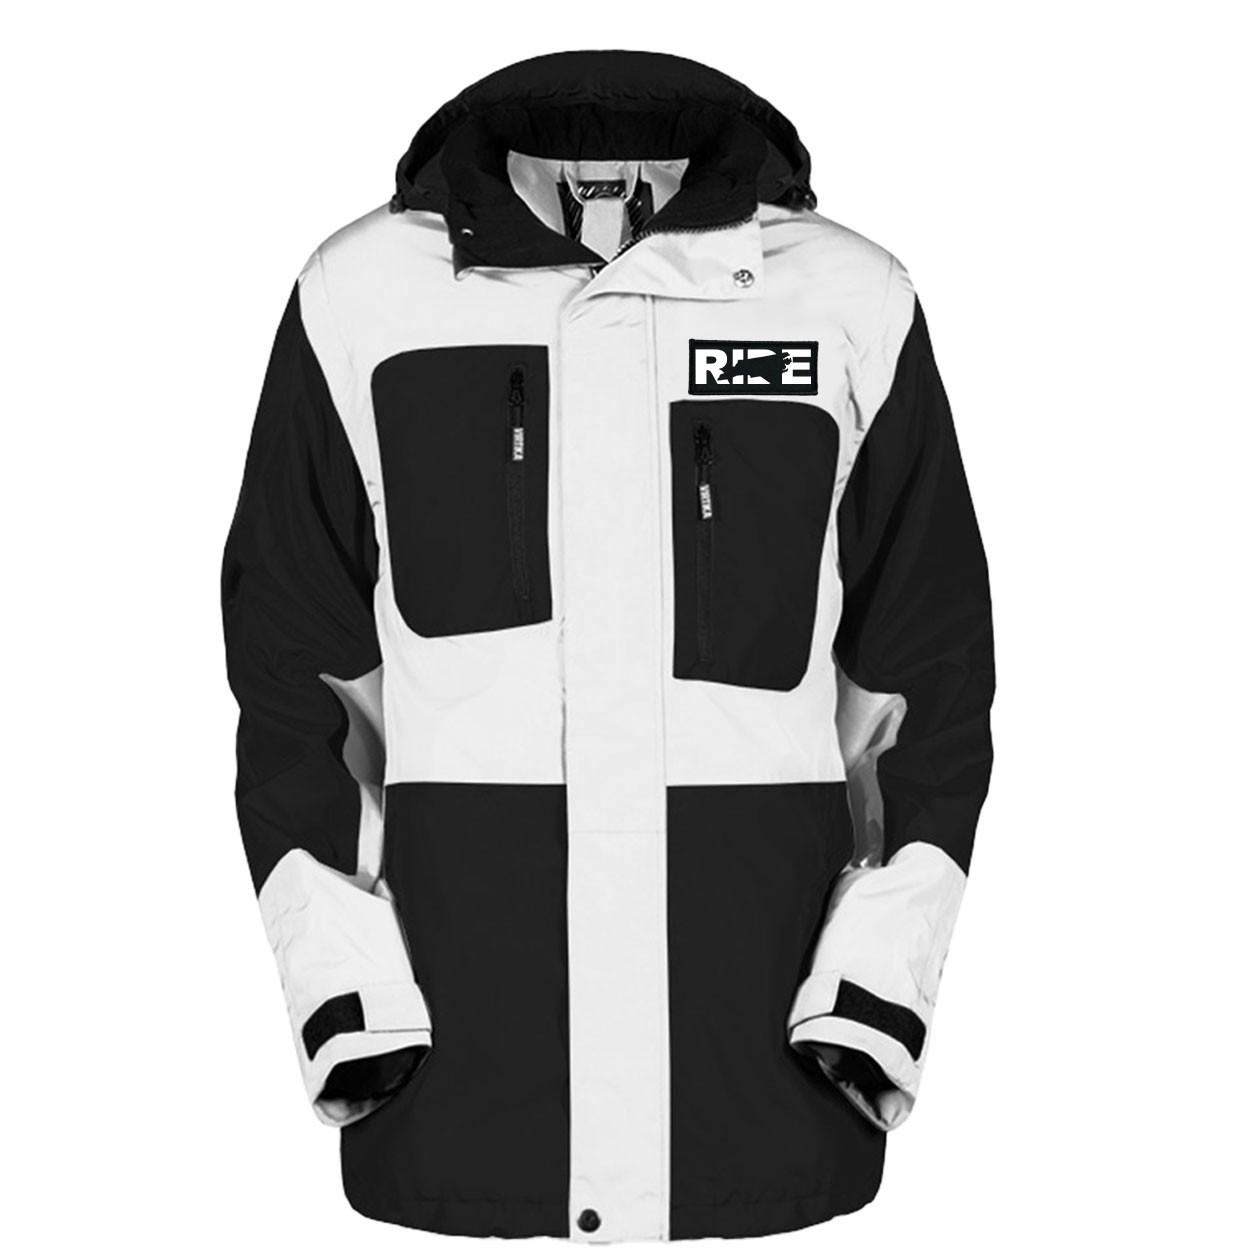 Ride North Carolina Classic Woven Patch Pro Snowboard Jacket (Black/White)